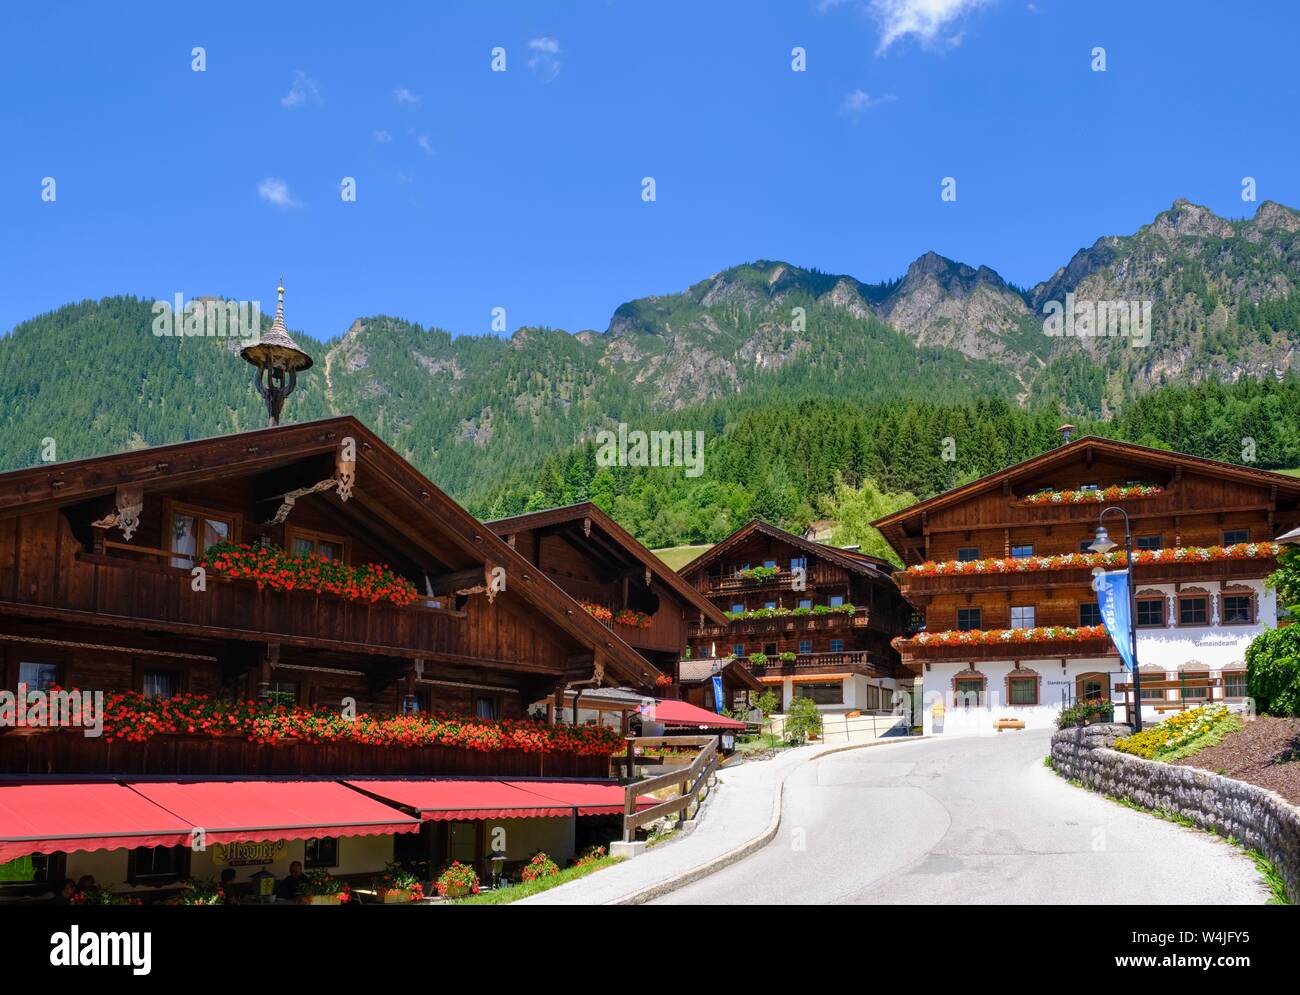 Wooden houses, Alpbach, Tyrol, Austria Stock Photo